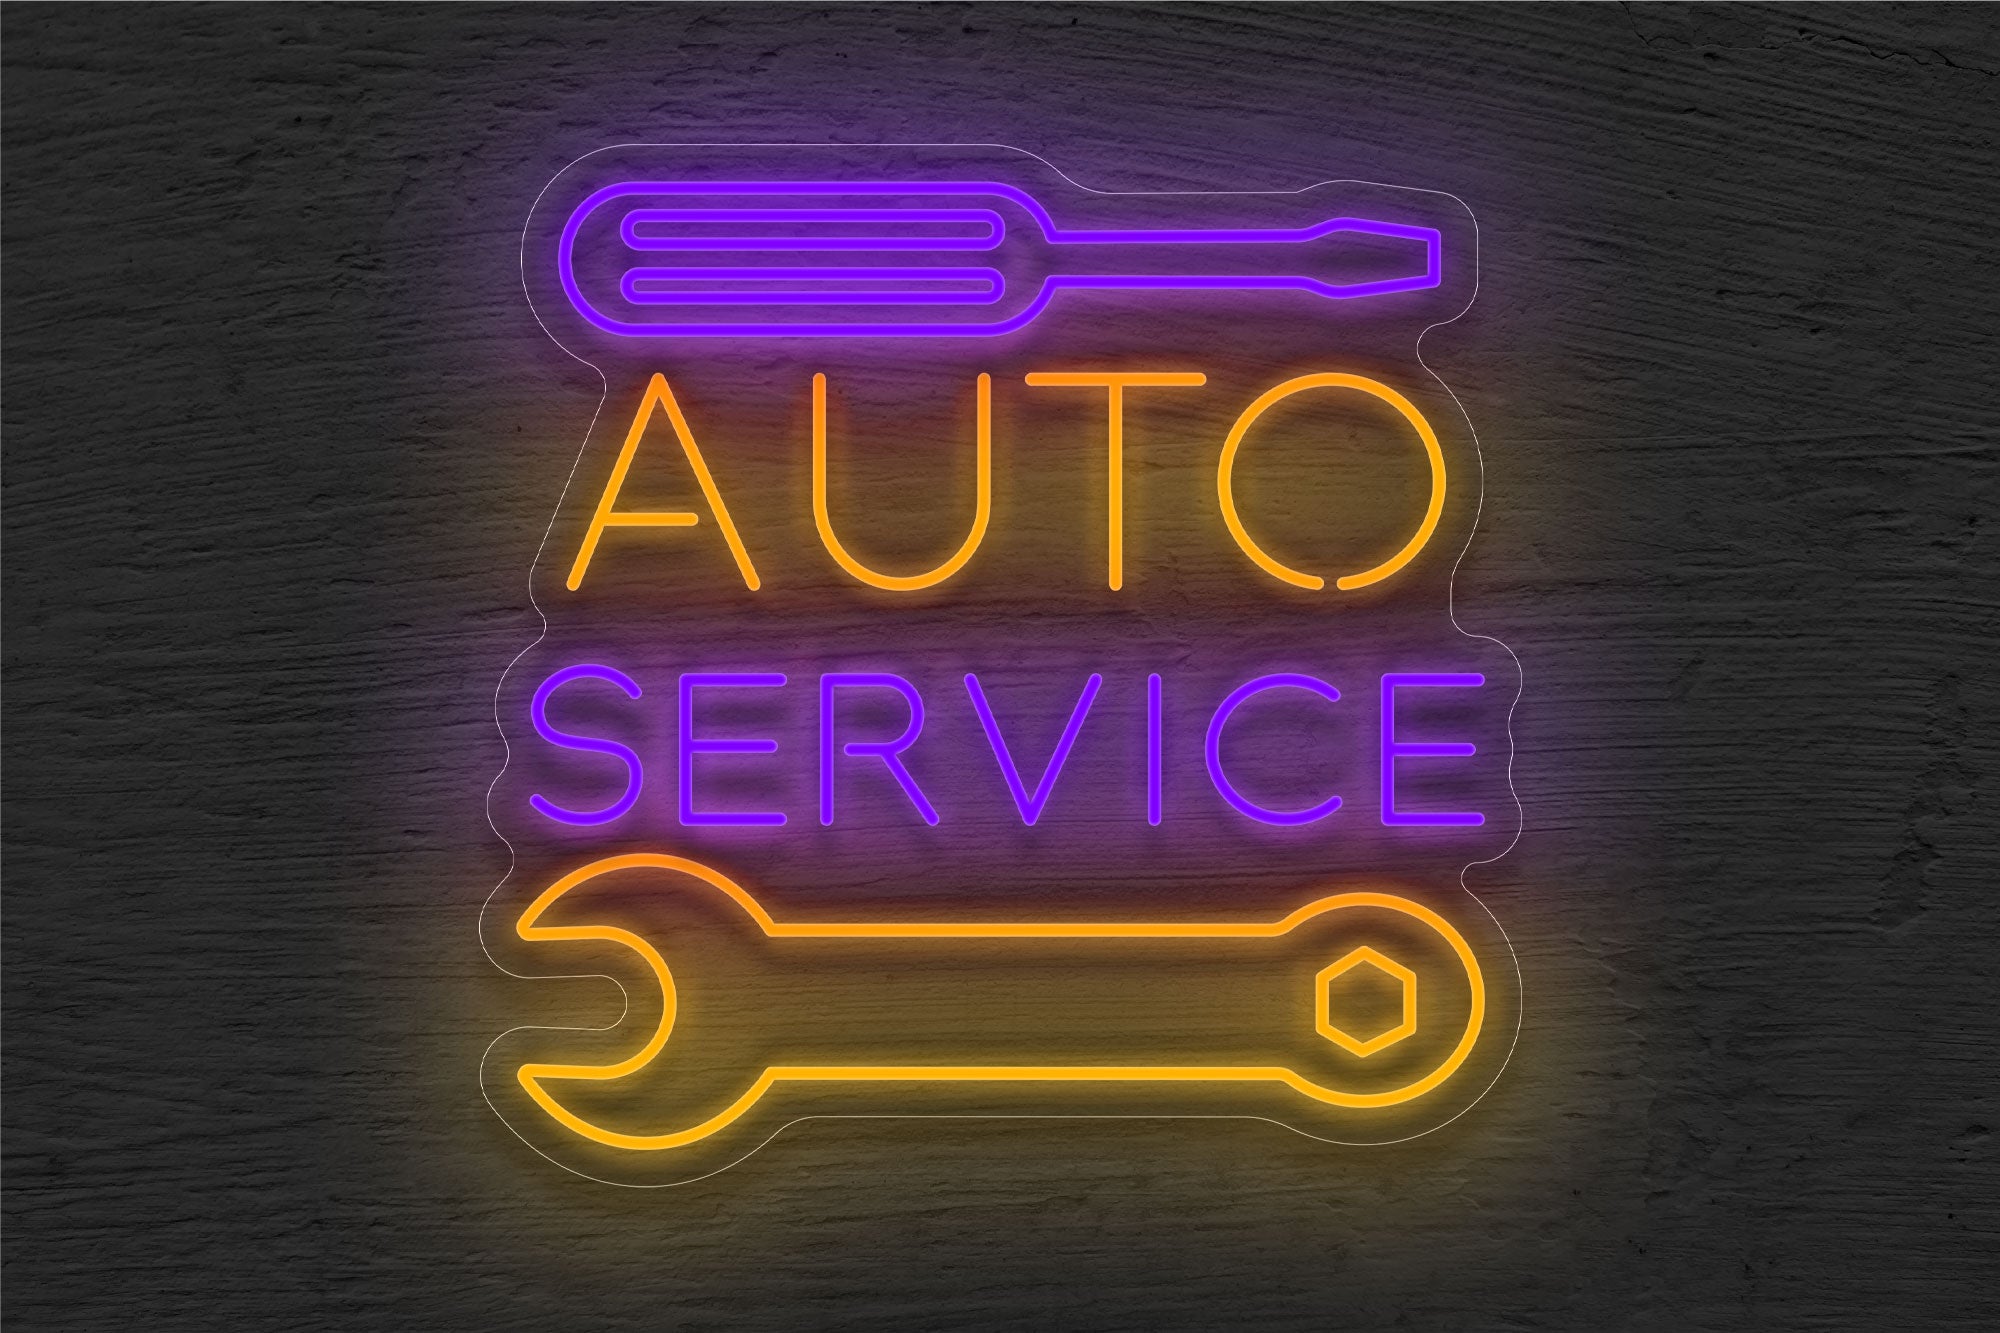 Buy Auto Tools Repair LED Neon Sign  Auto Repair Neon Signs from Best  Buy Neon Signs